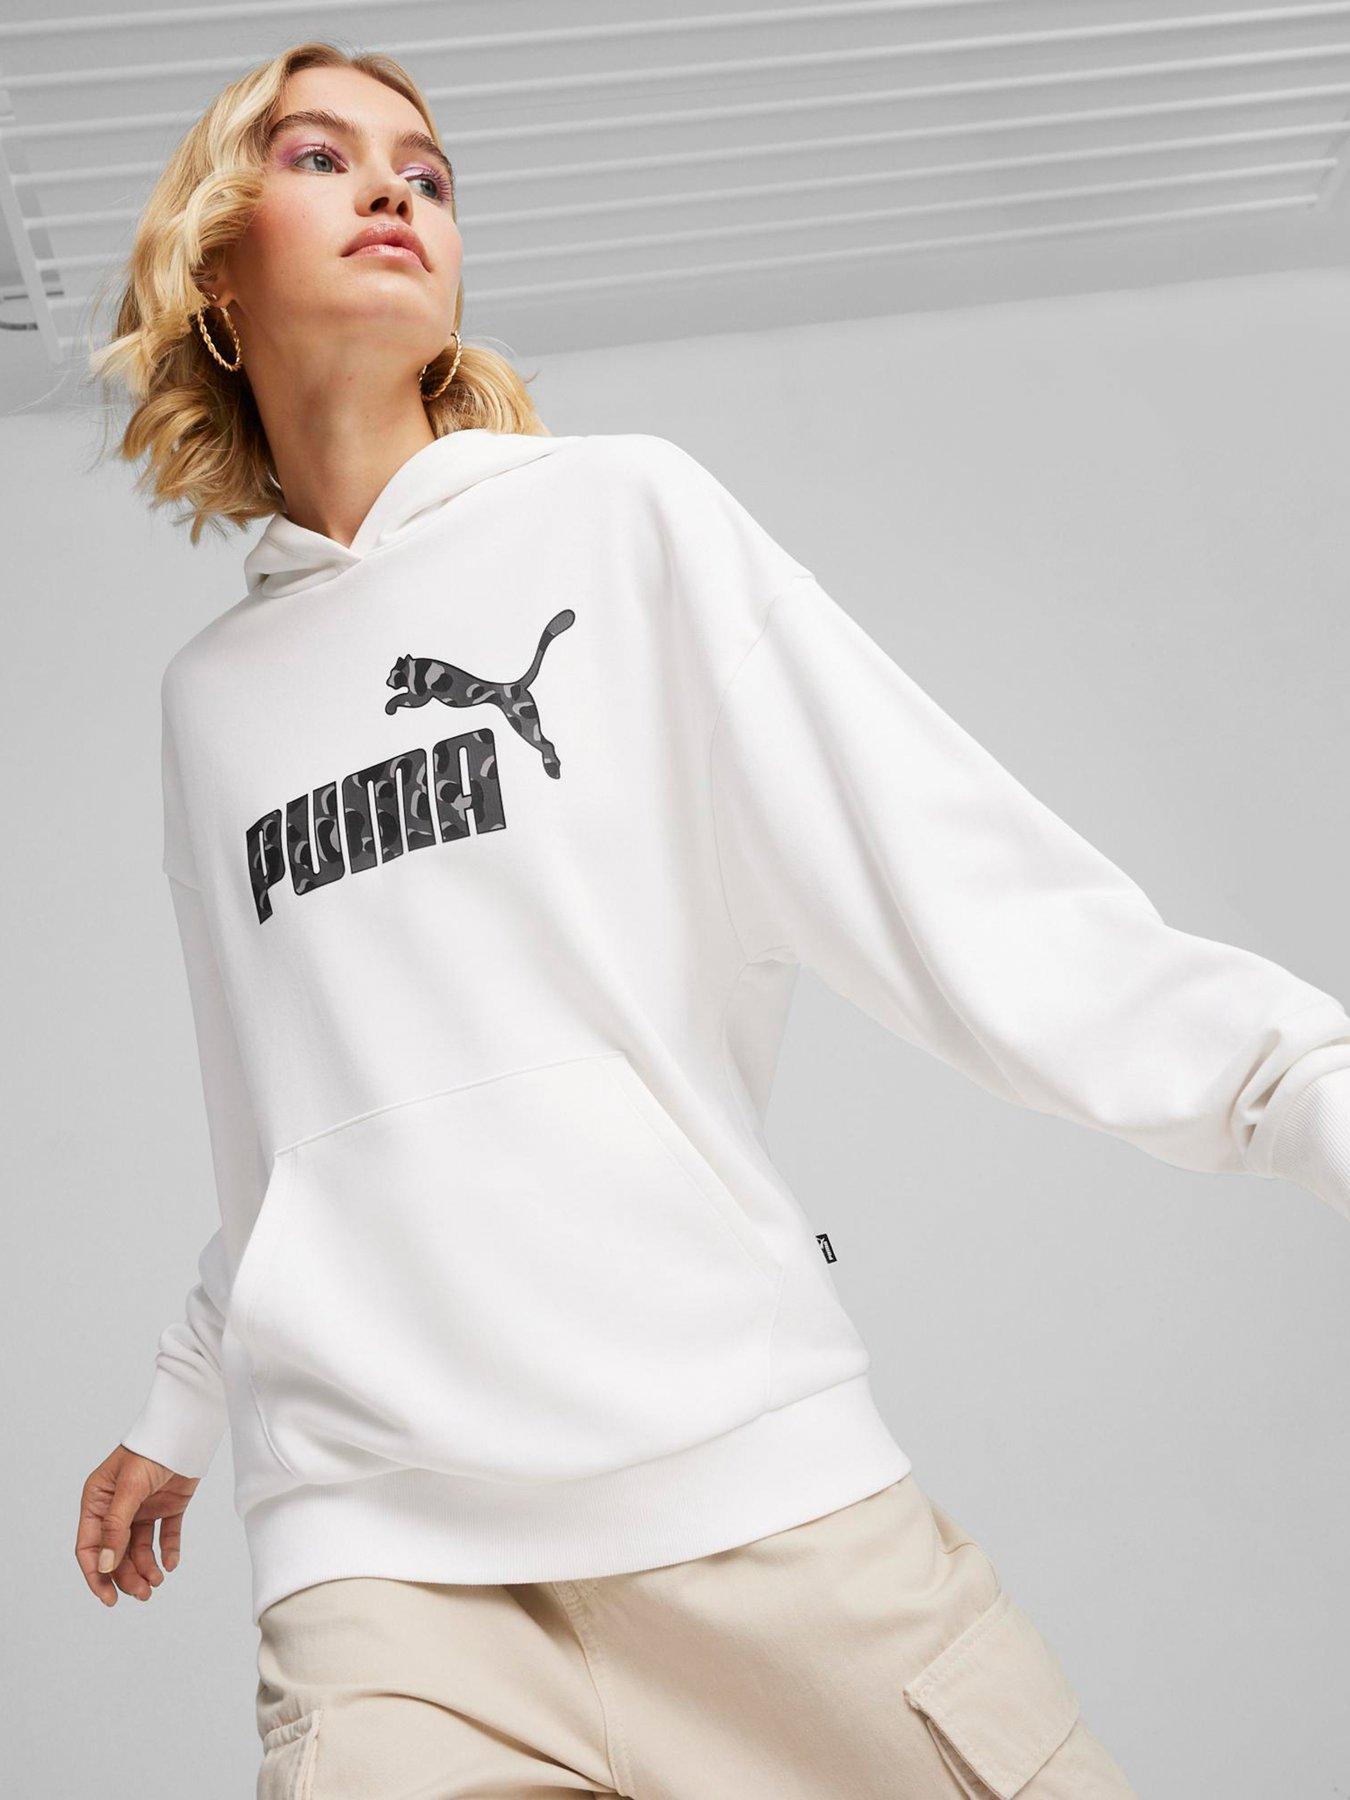 Puma Clothing for Women